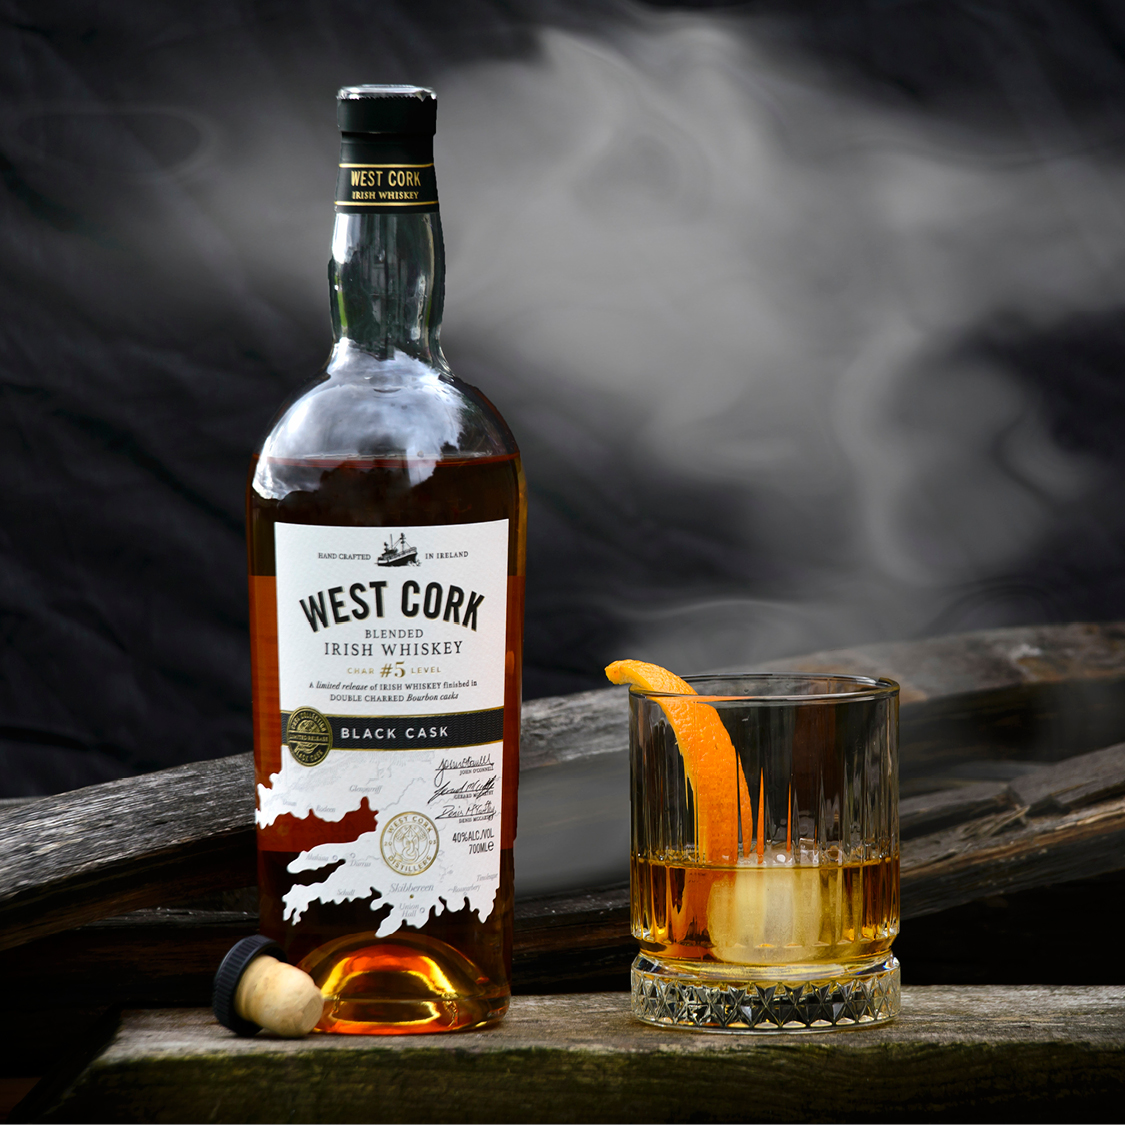 The only spirit we need this Halloween. 👻
.
.
.
#spirits #halloween #ireland #westcork #wildatlanticway #irishwhiskey #westcorkwhiskey #whiskey #whiskeylover #whiskeygram #instawhiskey #guidedbyinstinct